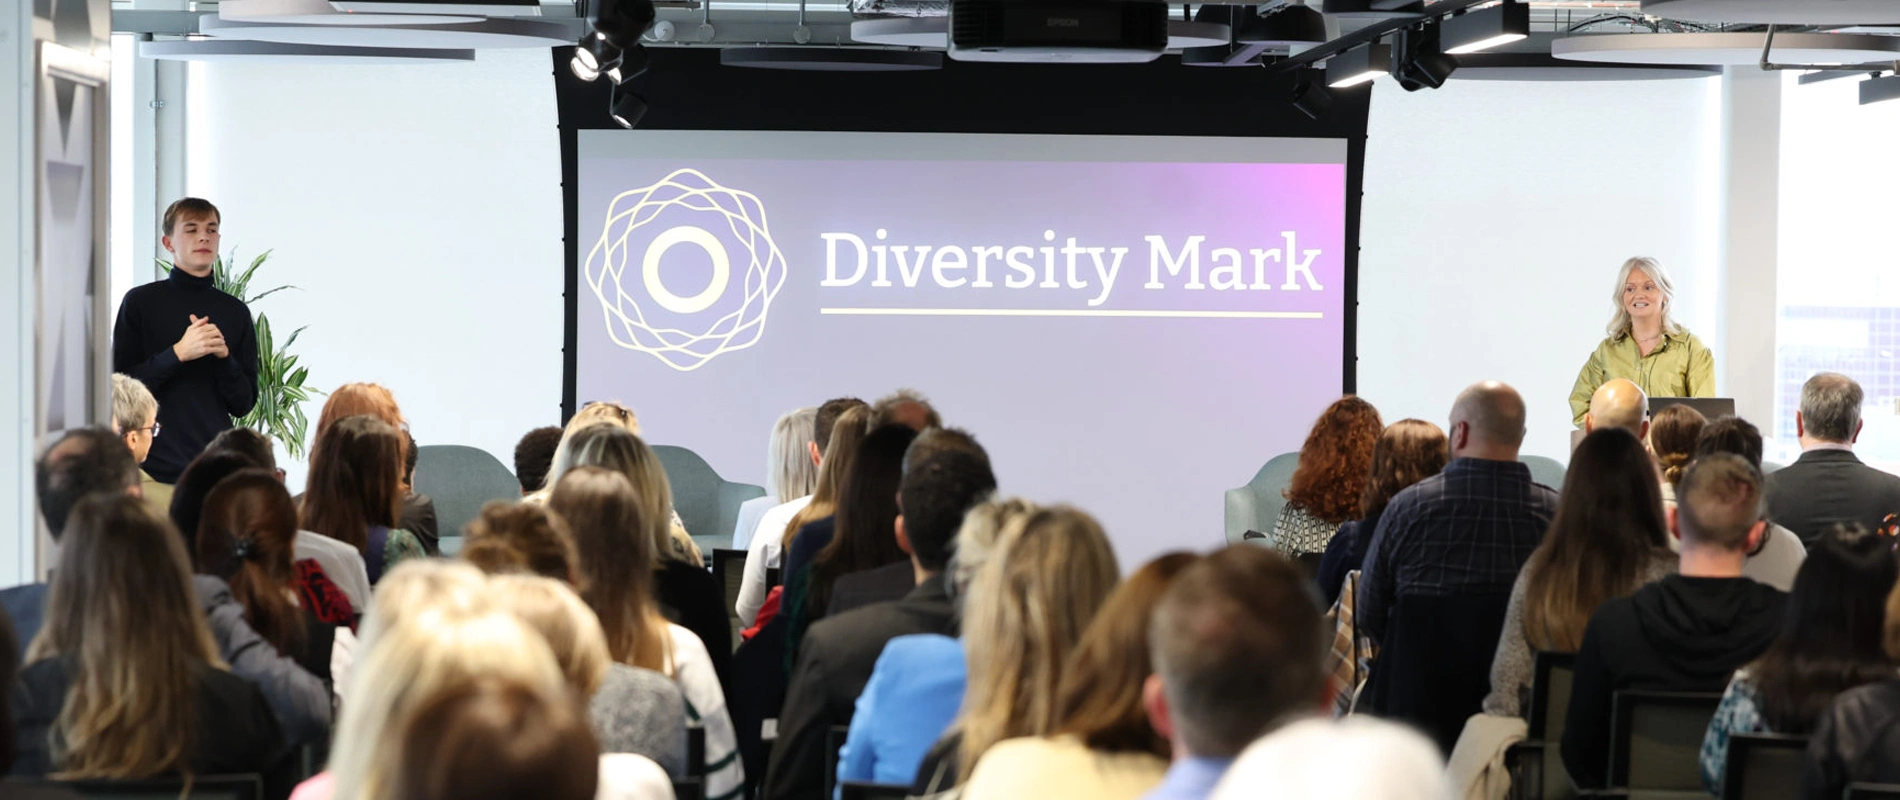 Nuala Murphy launching the new Diversity Mark brand by Stenson Wolf in Belfast